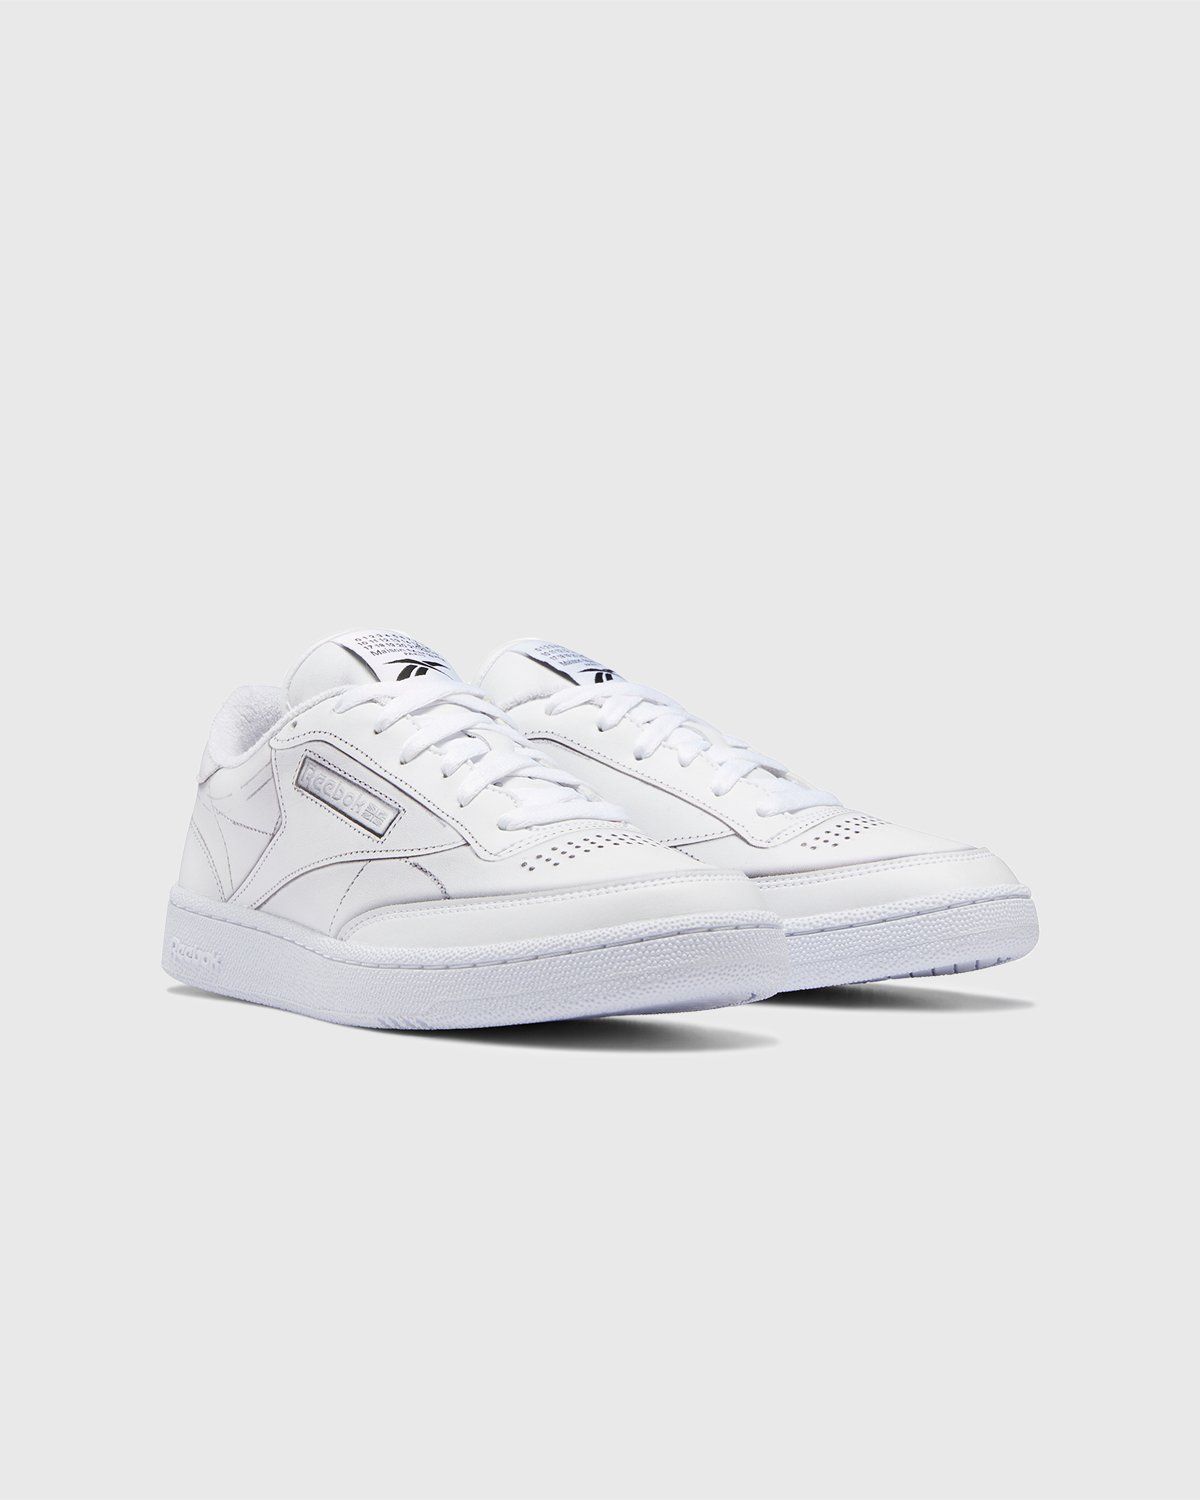 Maison Margiela x Reebok – Club C Trompe L’Oeil White - Sneakers - White - Image 2